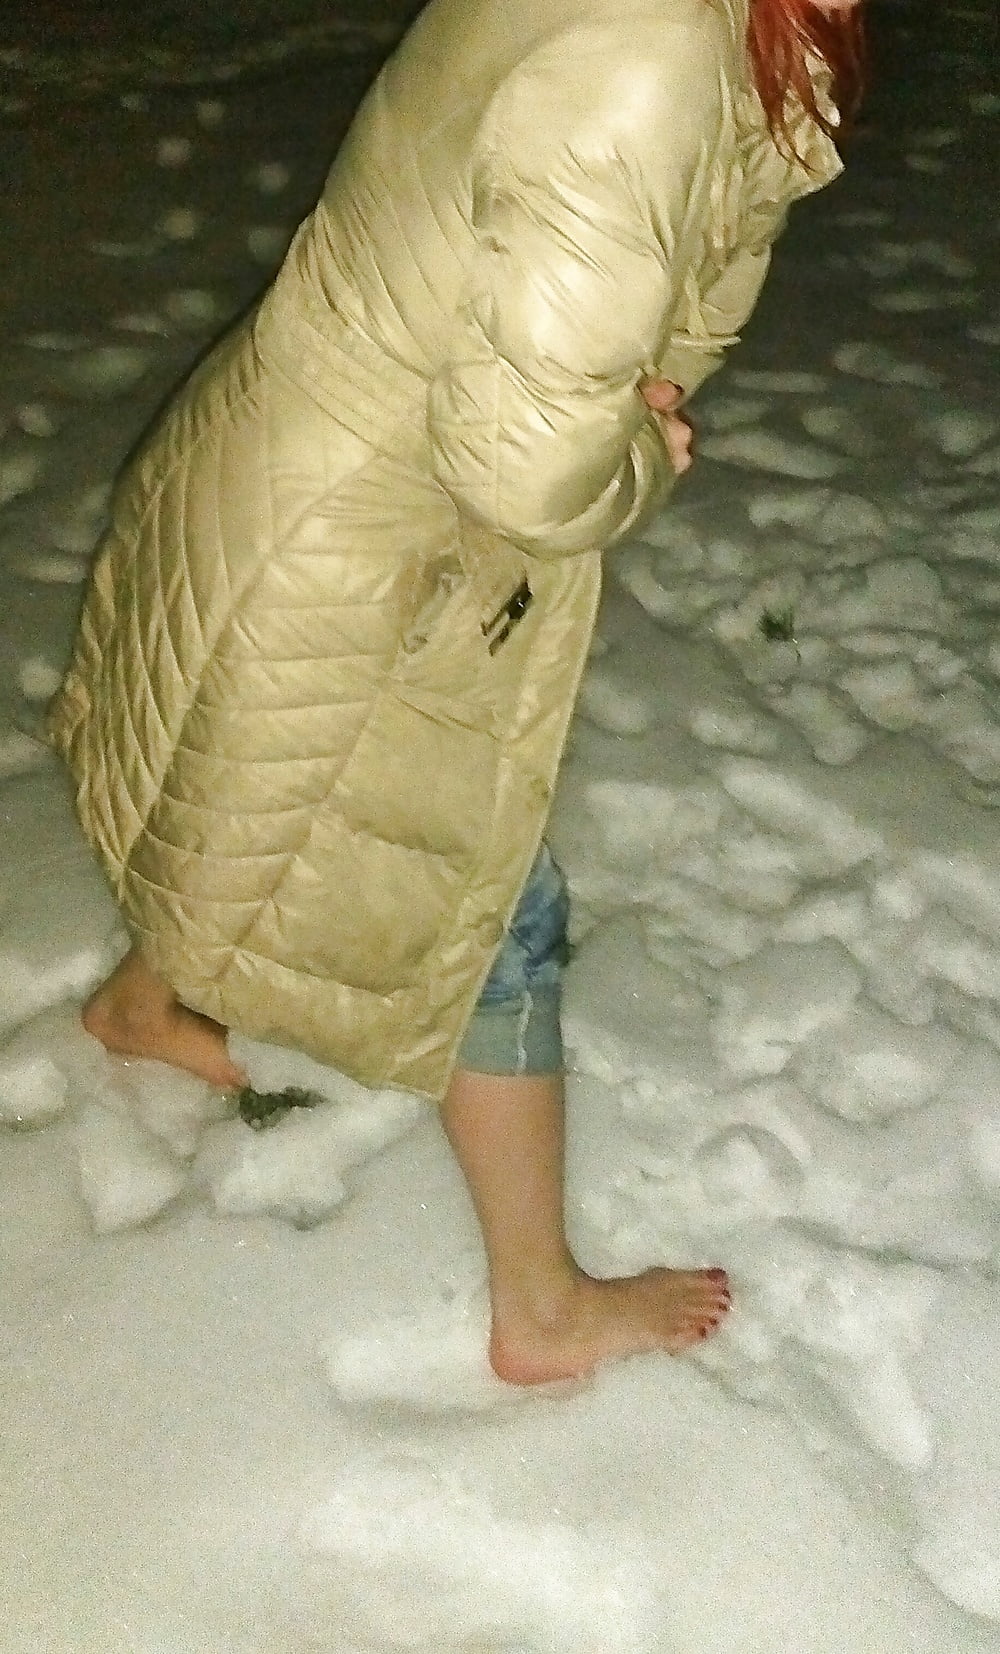 Zena bosa u snegu 2 Wife barefeet in snow 2 (12/12)